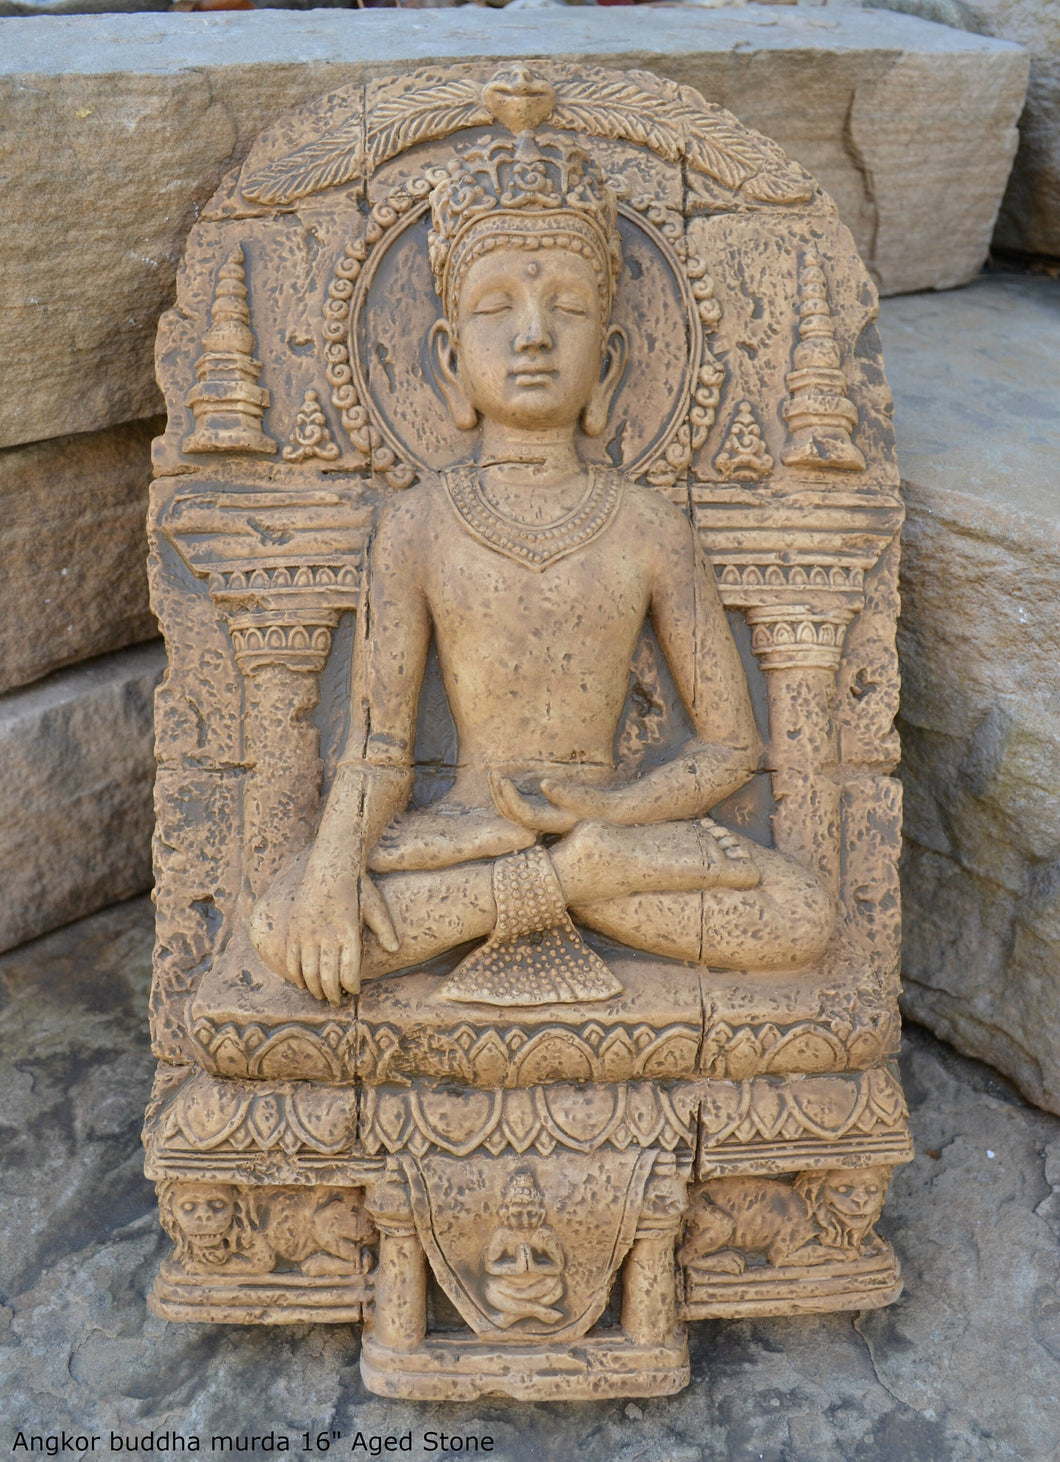 Asia Angkor buddha murda artifact wall sculpture statue 16